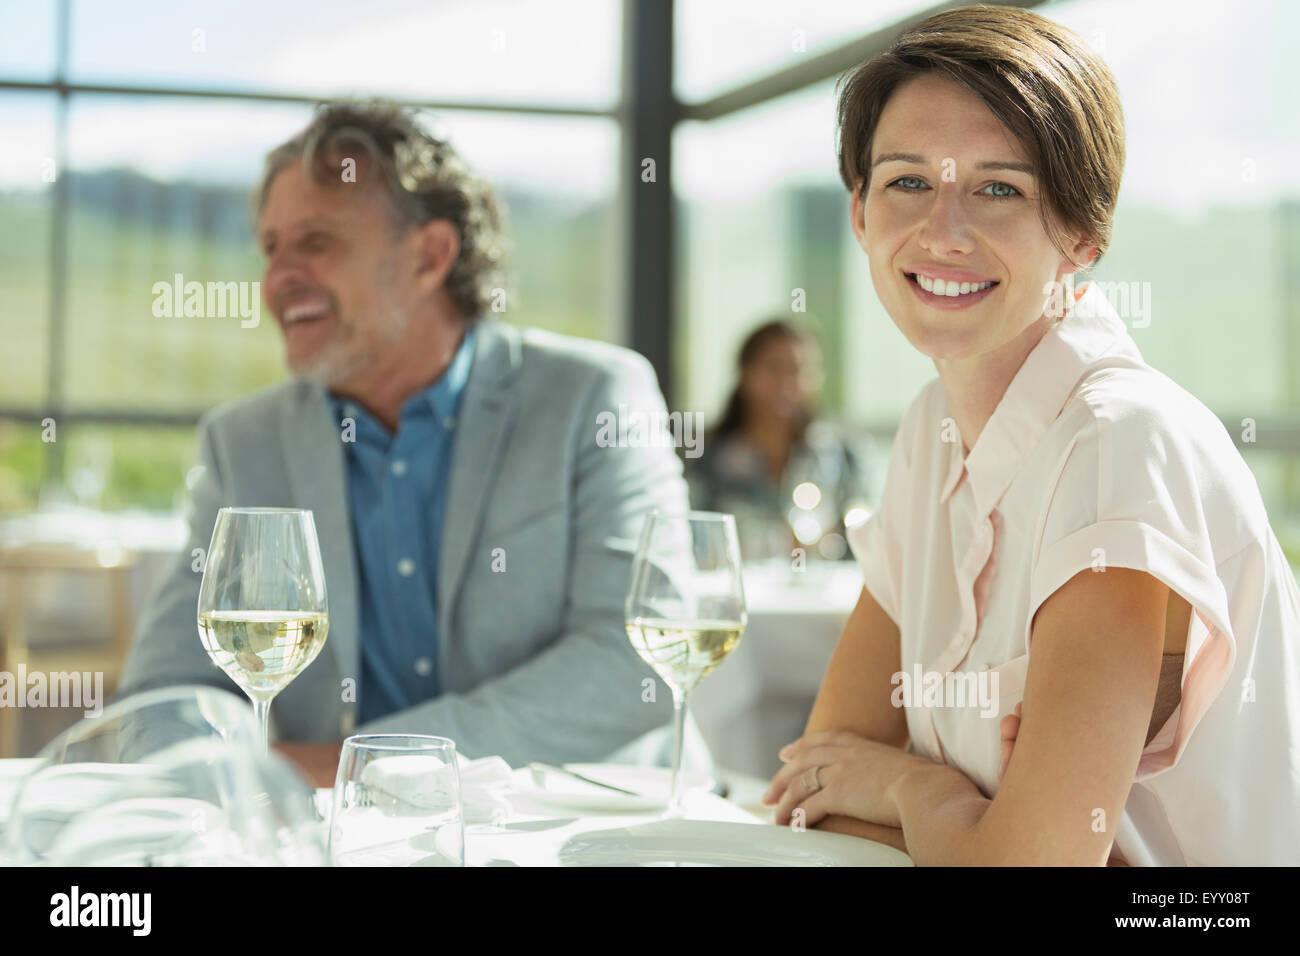 Portrait of smiling woman drinking wine in restaurant ensoleillé Banque D'Images